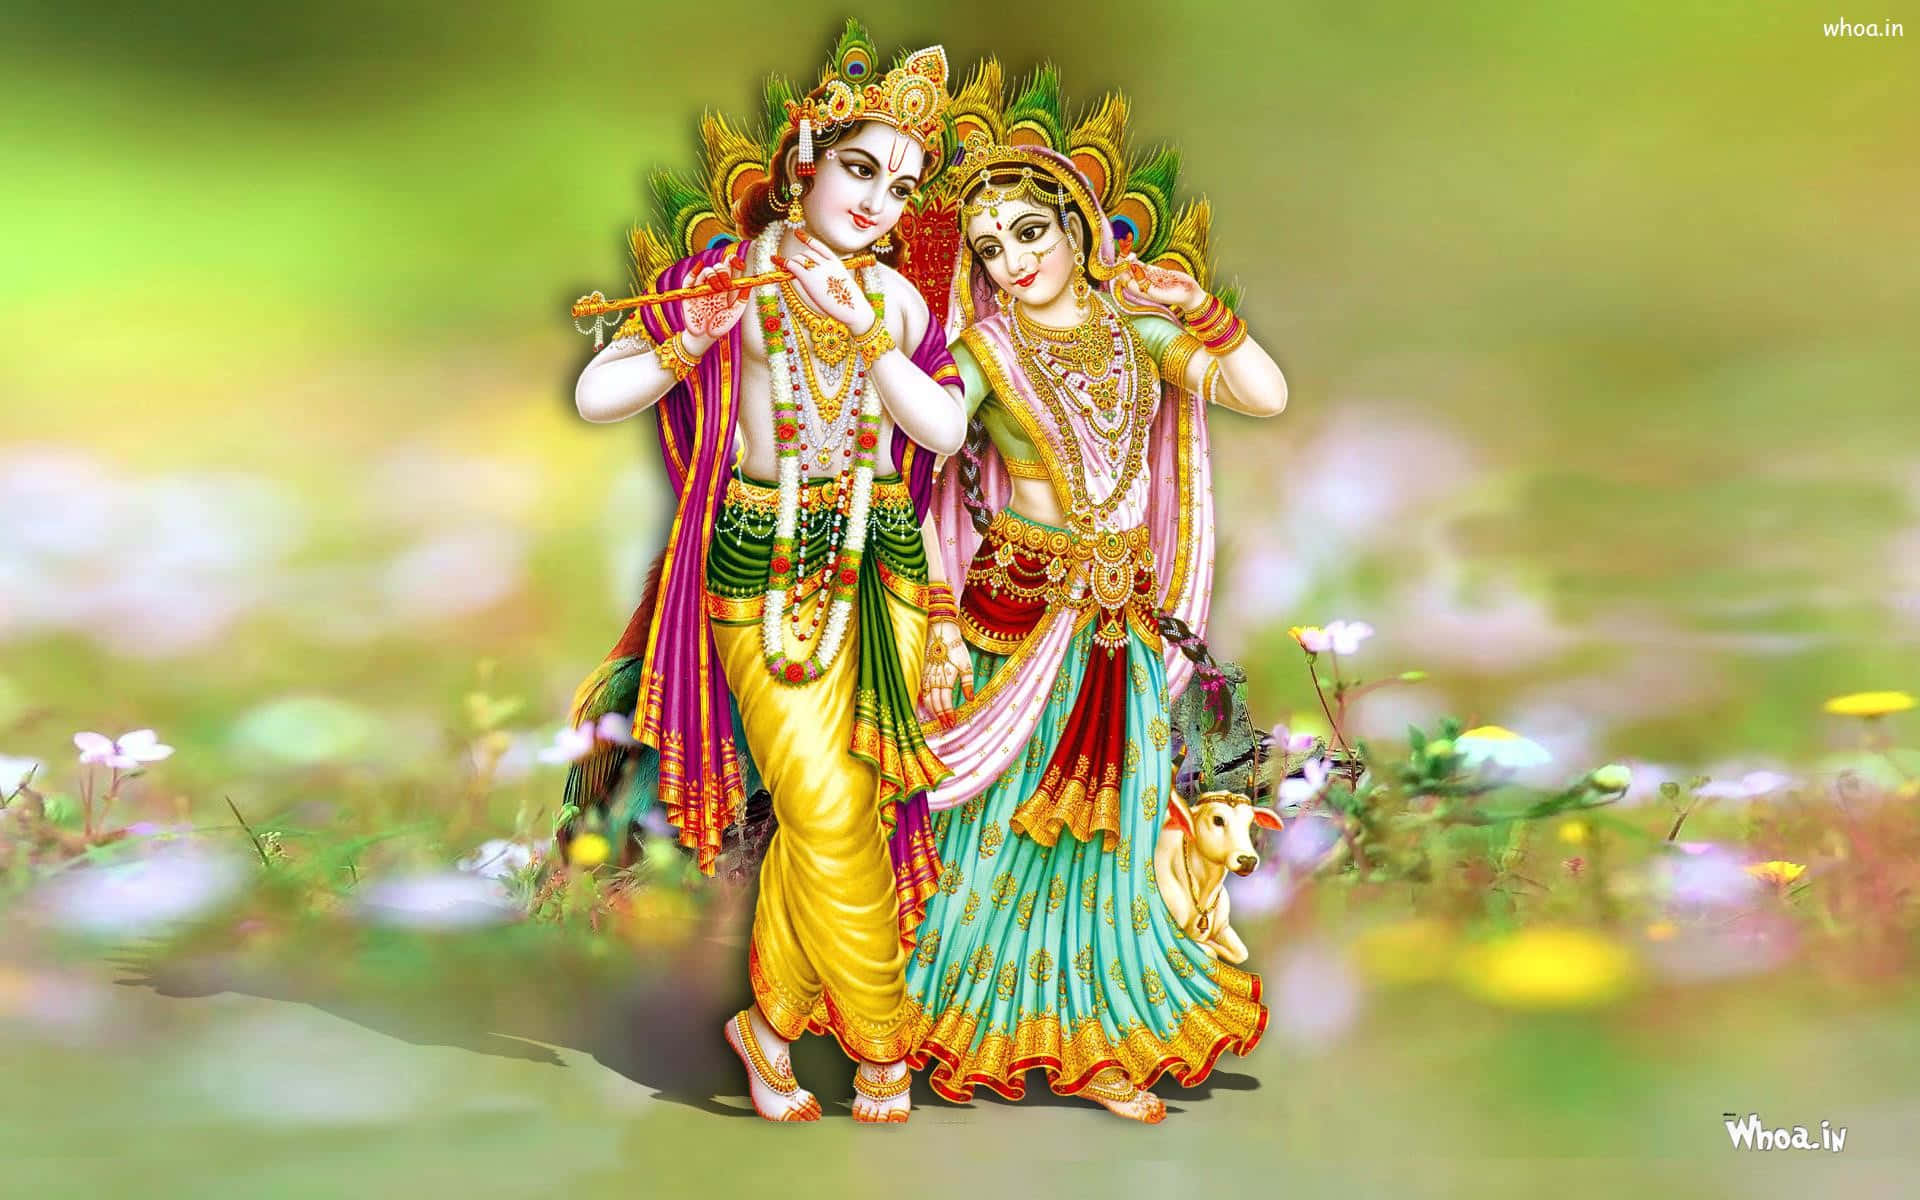 Kärlekensgudomliga: Radha Och Krishna I Fullkomlig Harmoni